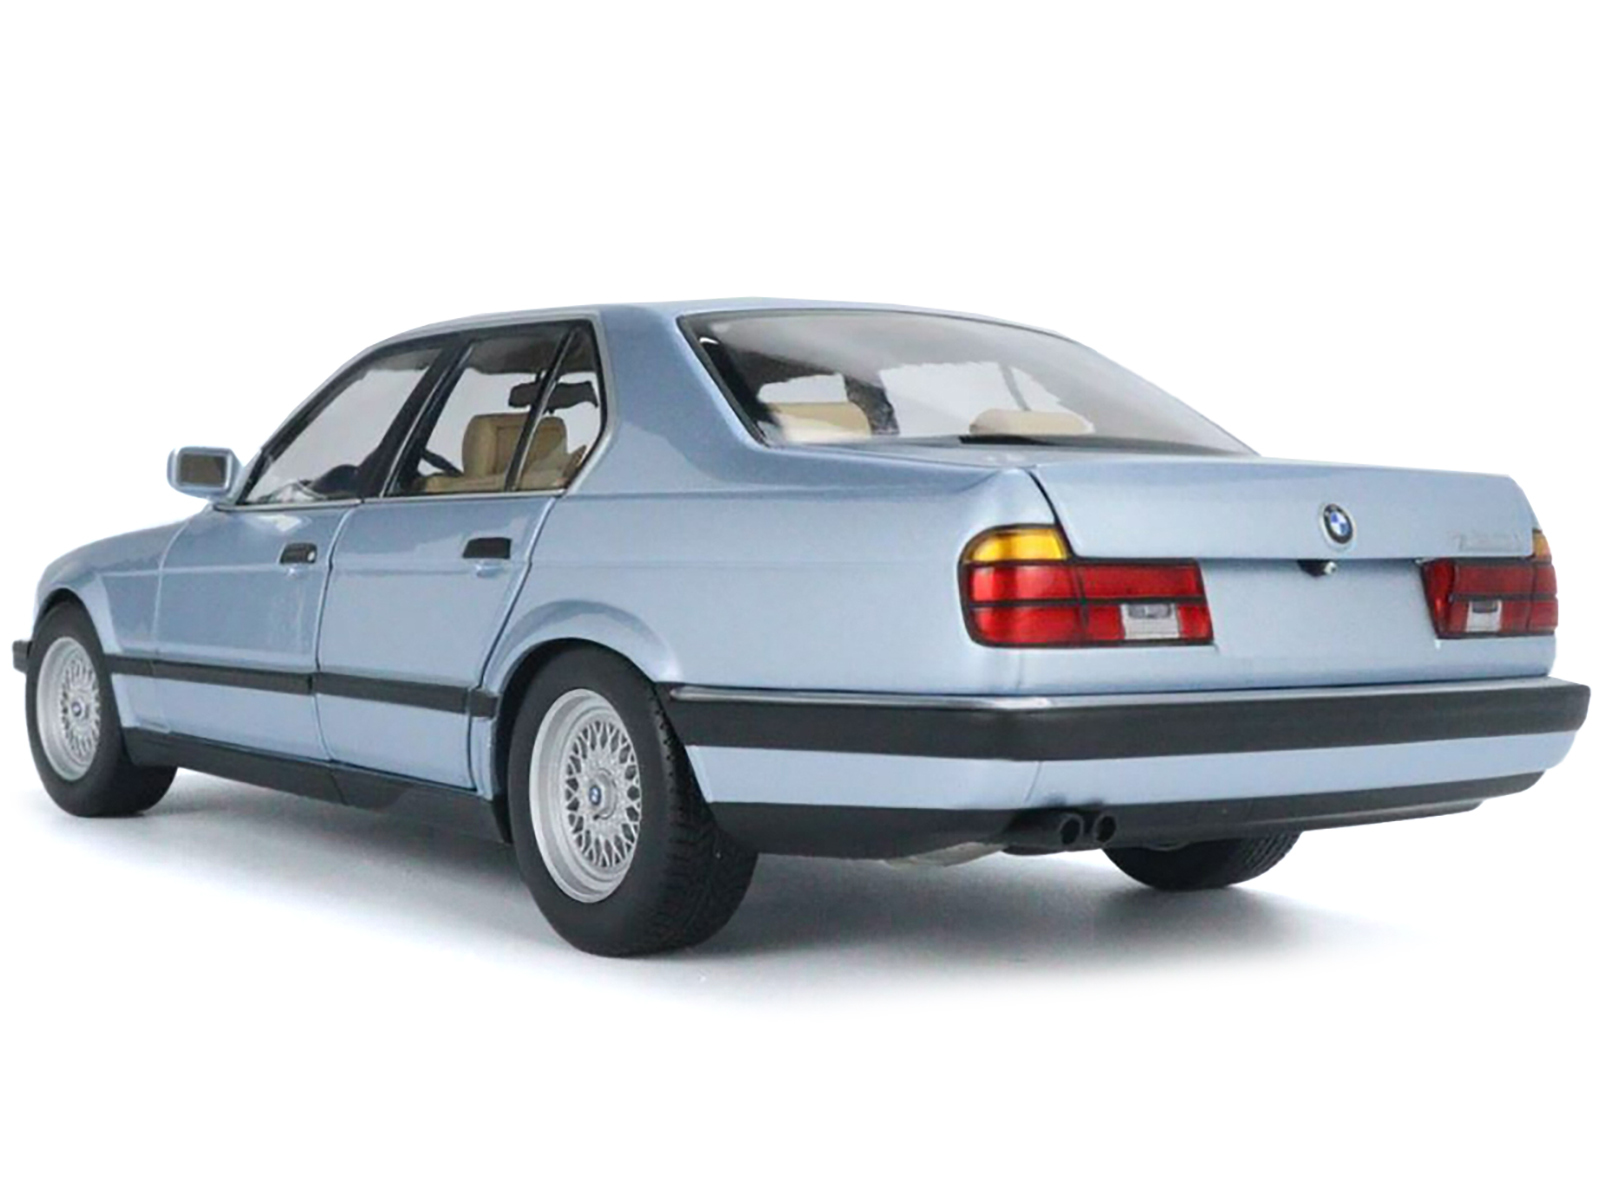 1986 BMW 730i (E32) Light Blue Metallic 1/18 Diecast Model Car by Minichamps - $216.49